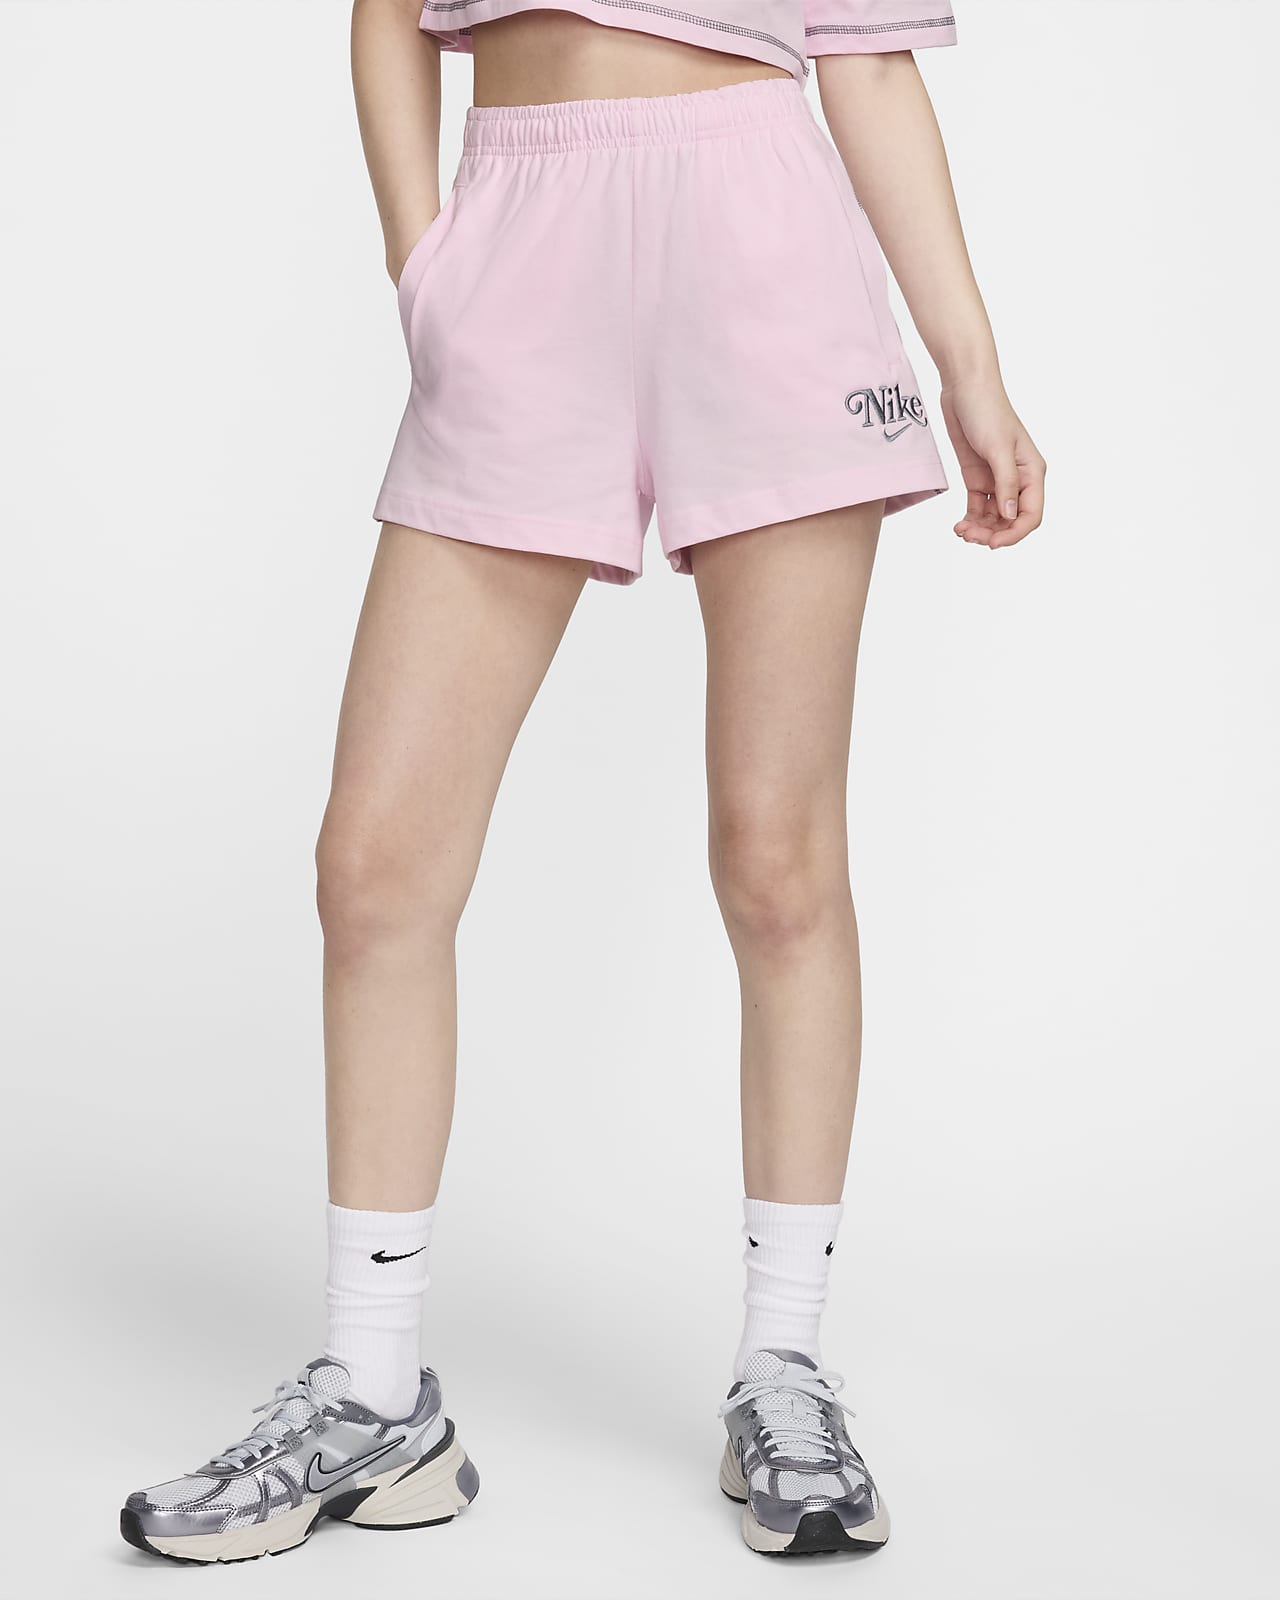 Calções de malha Jersey Nike Sportswear para mulher